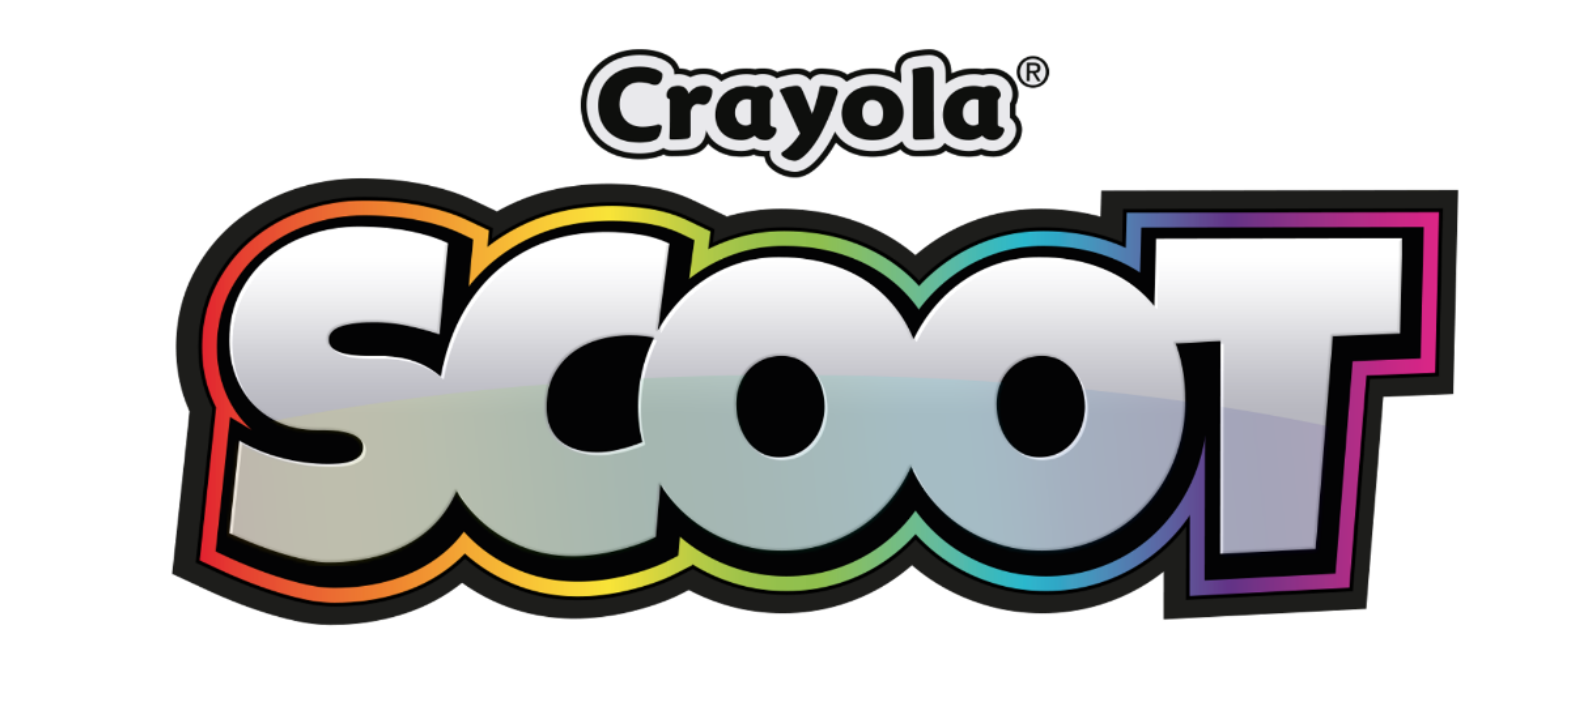 Crayola Scoot ya está disponible - MeriStation.